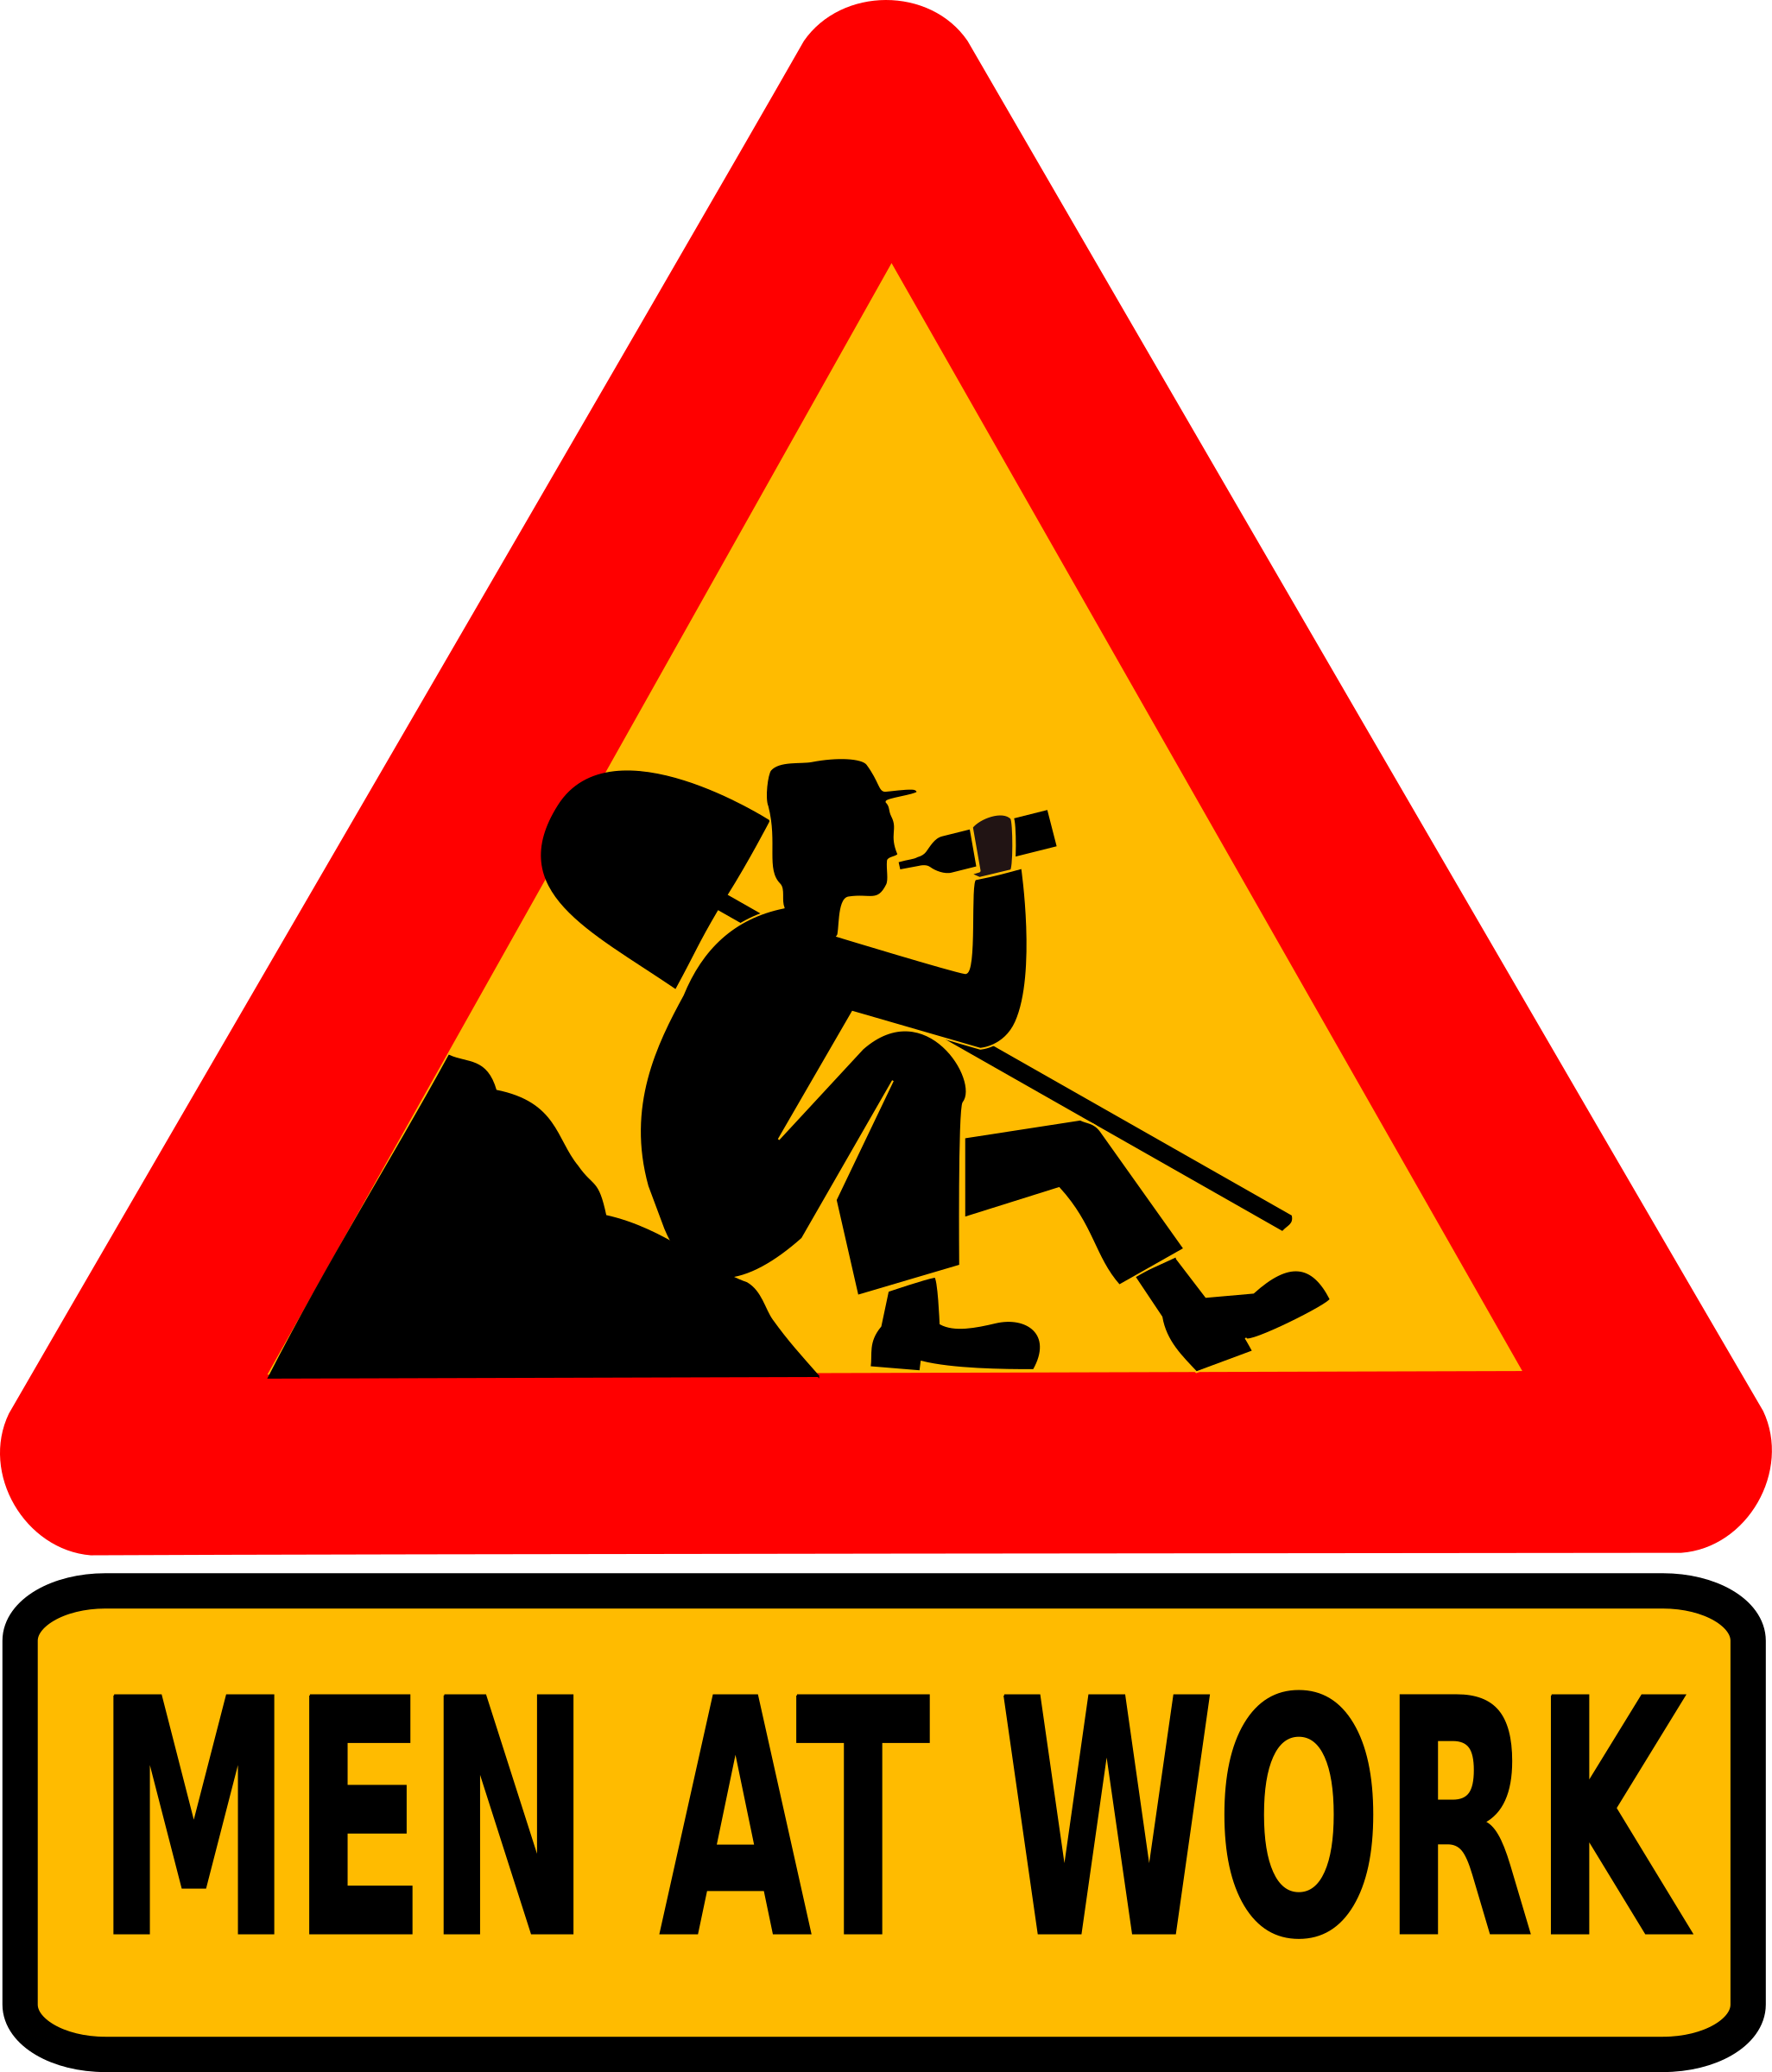 Clipart - Men at work